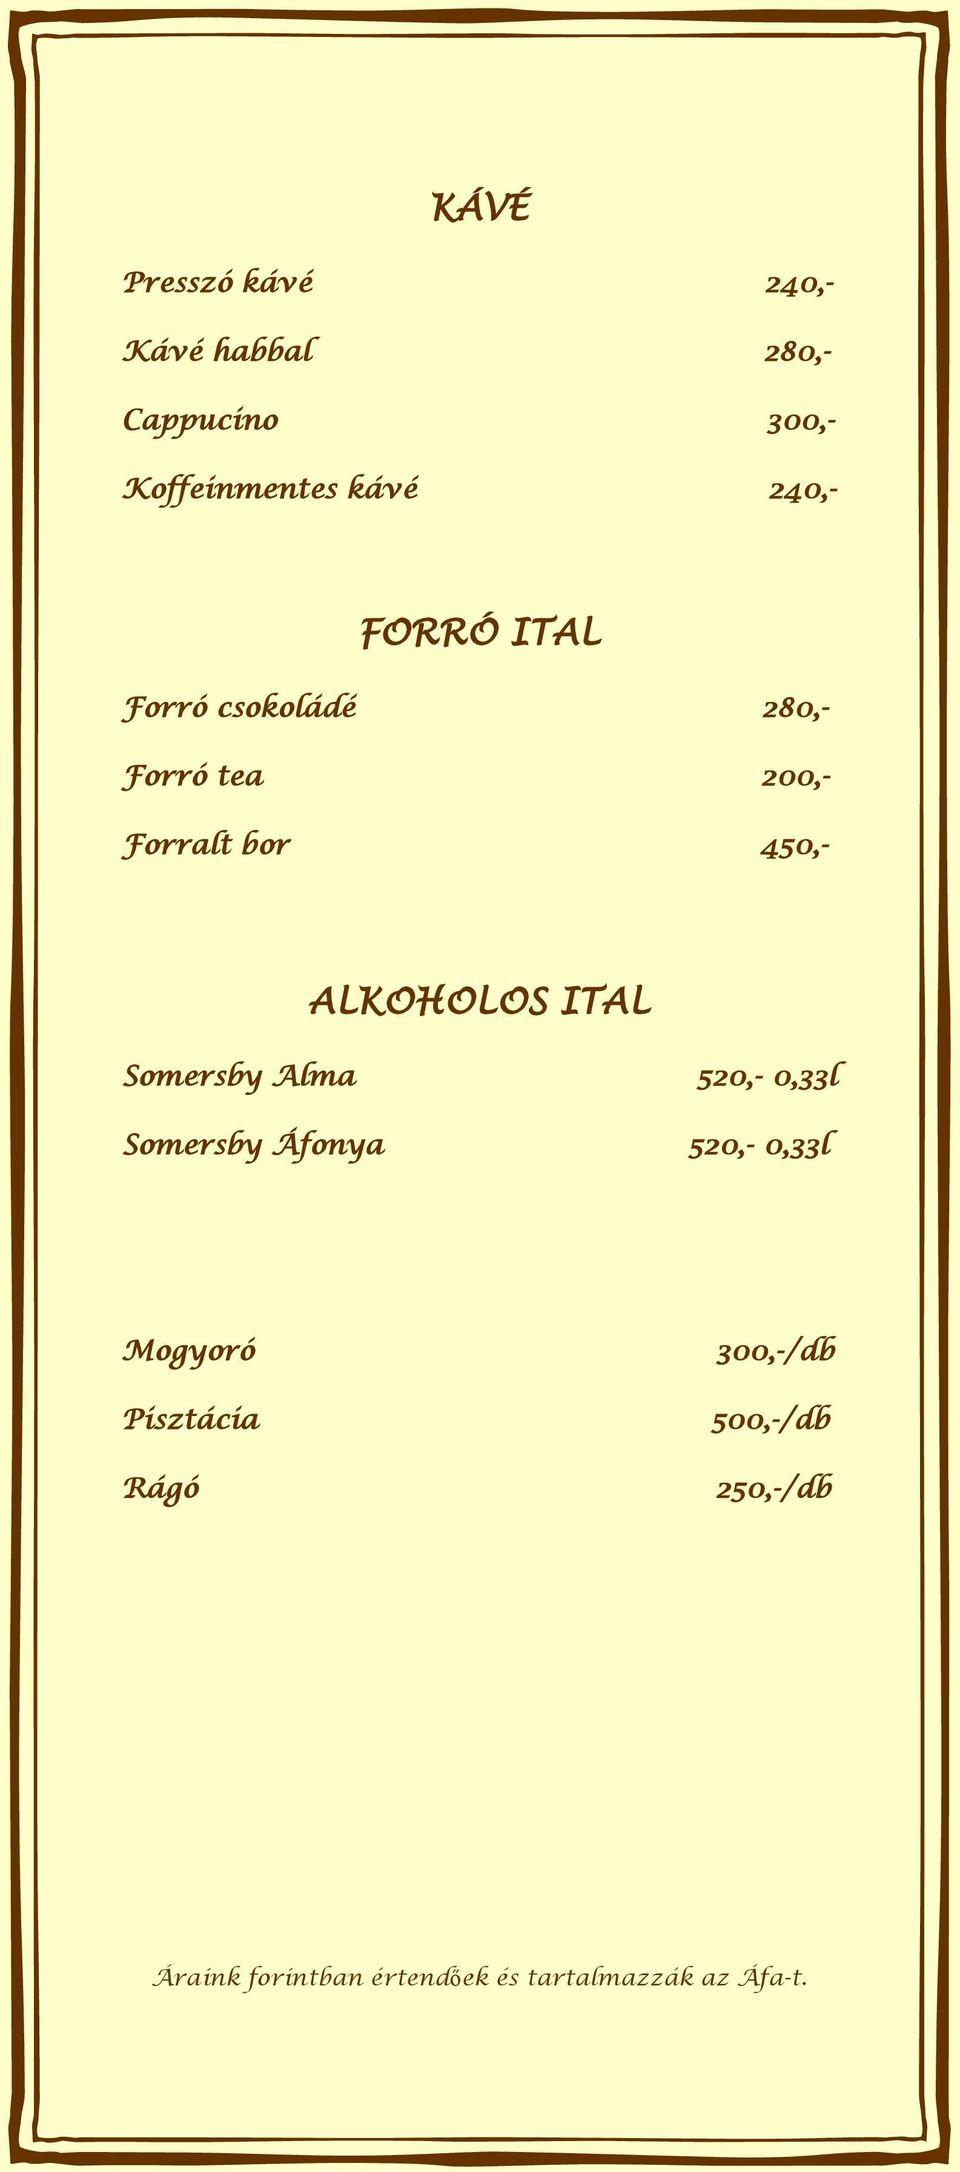 tea 200,- Forralt bor 450,- ALKOHOLOS ITAL Somersby Alma 520,-